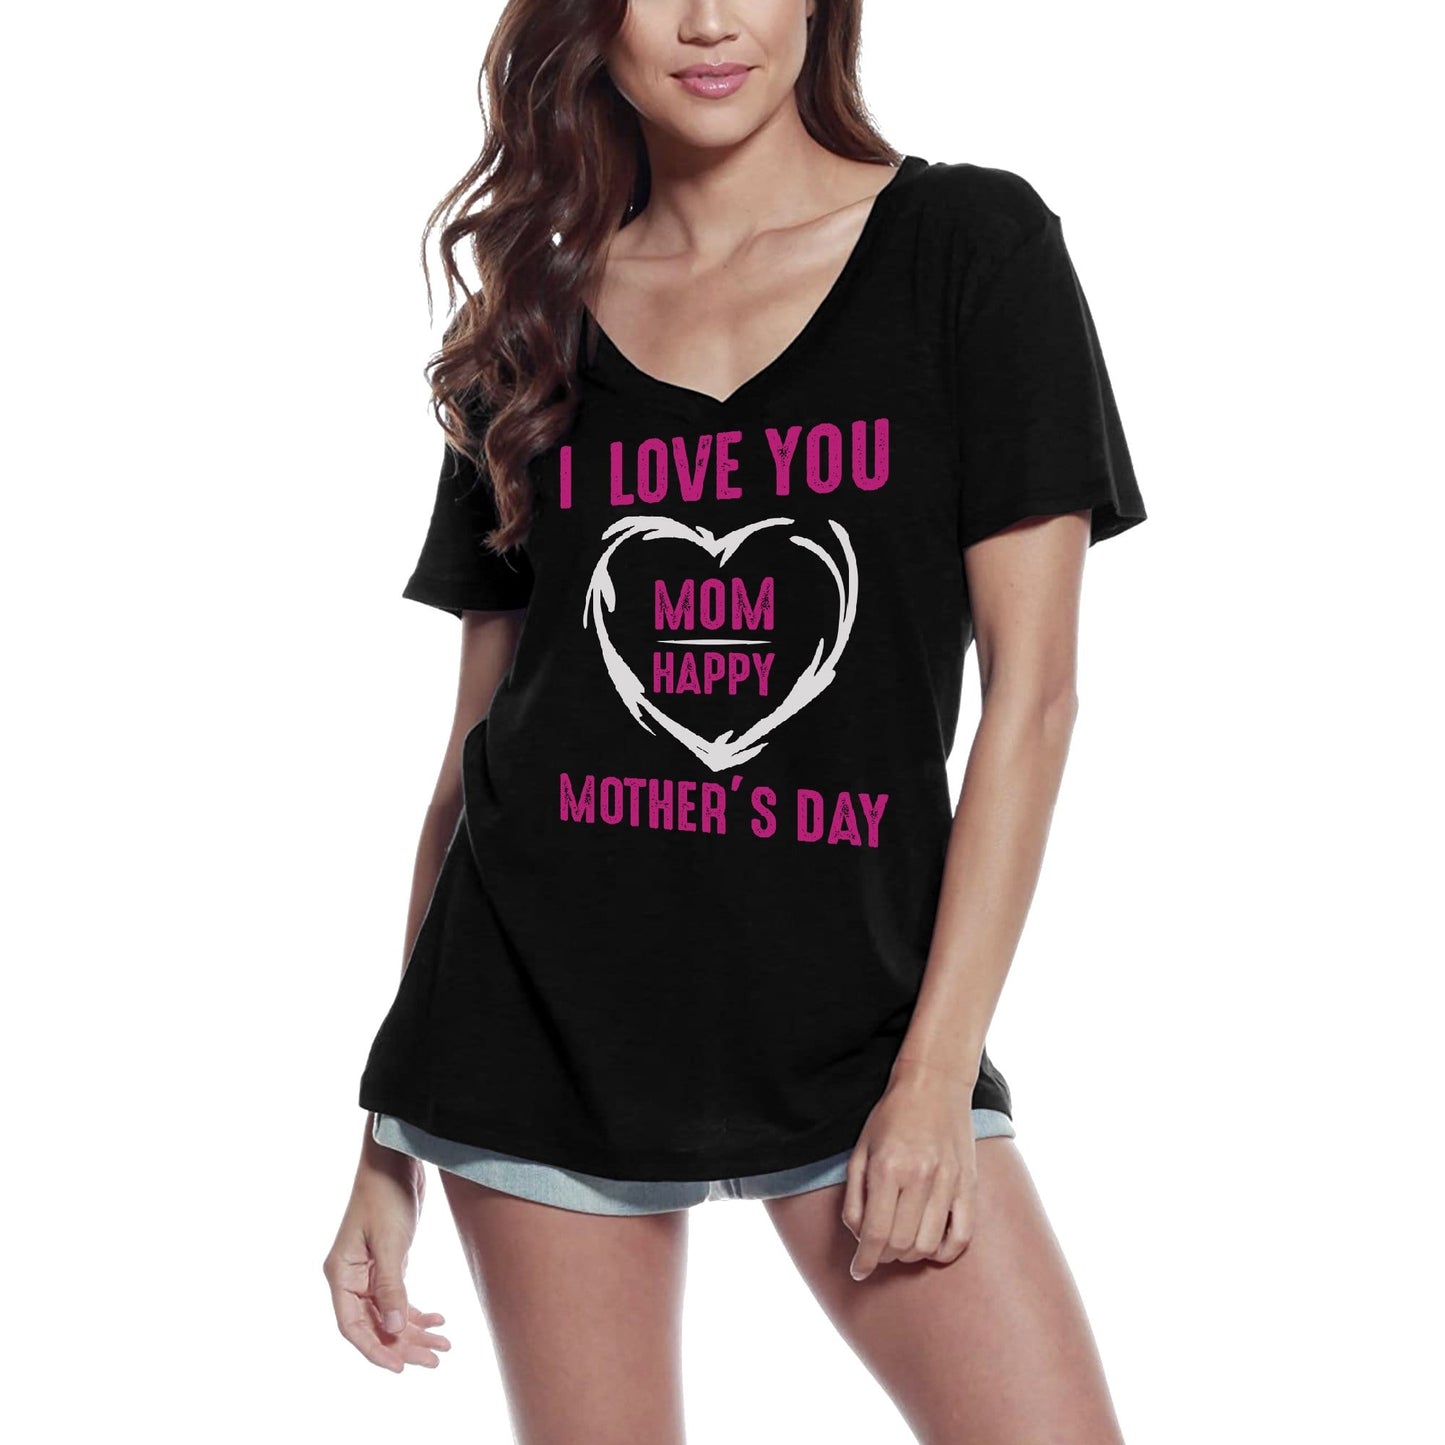 ULTRABASIC Women's T-Shirt I Love You Mom - Mother's Day Short Sleeve Tee Shirt Tops